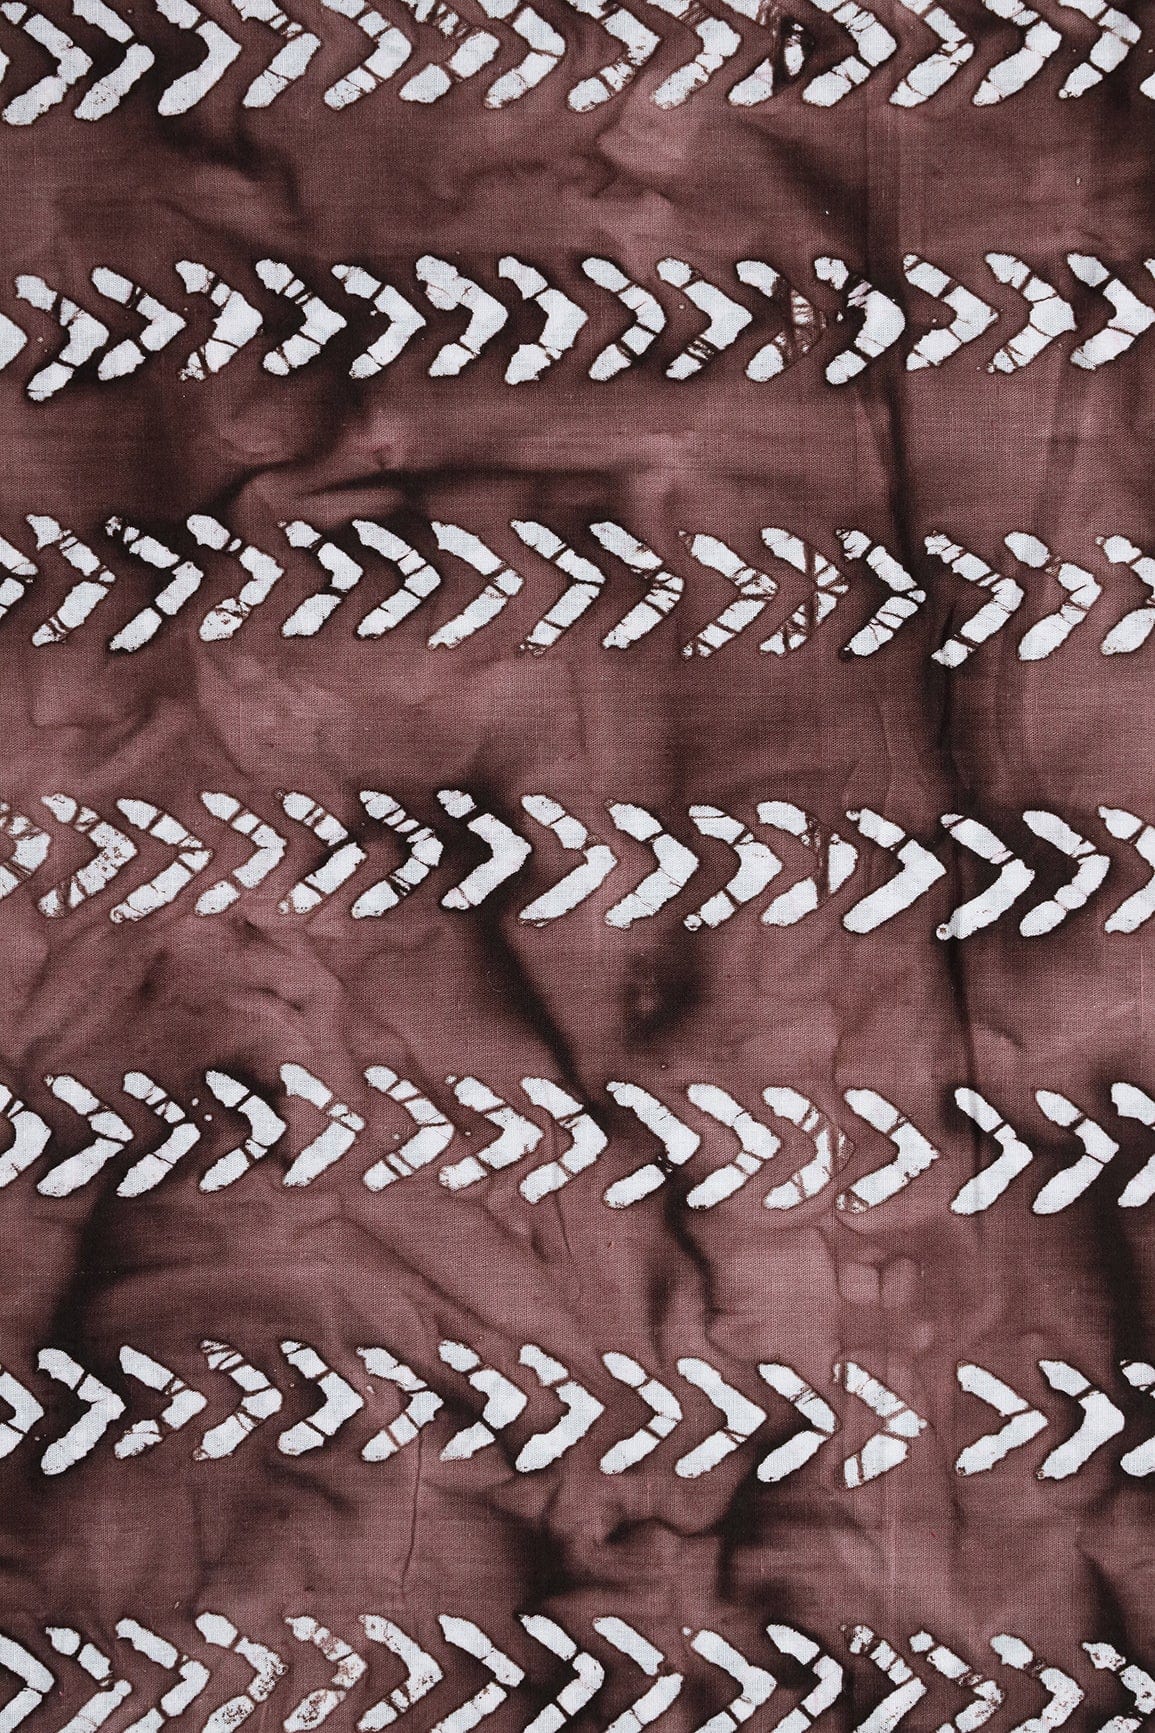 doeraa Prints White And Brown Geometric Pattern Batik Hand block Organic Cotton Fabric